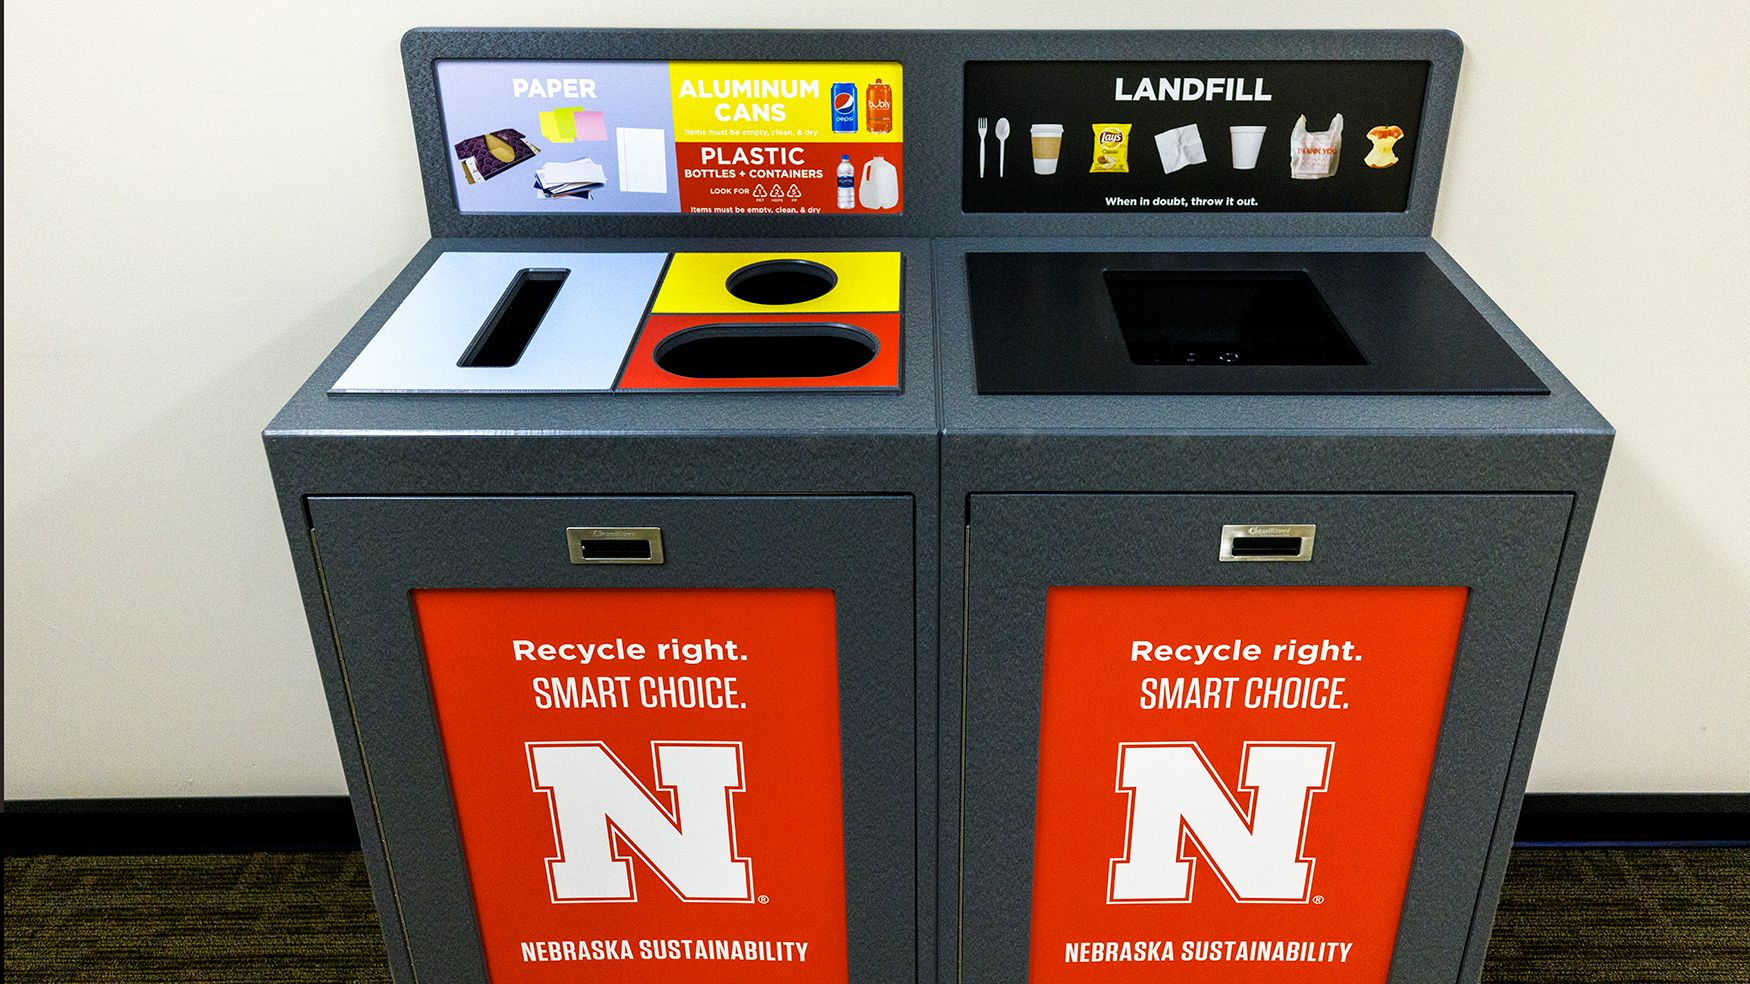 New recycling program rolls out across campus, Nebraska Today